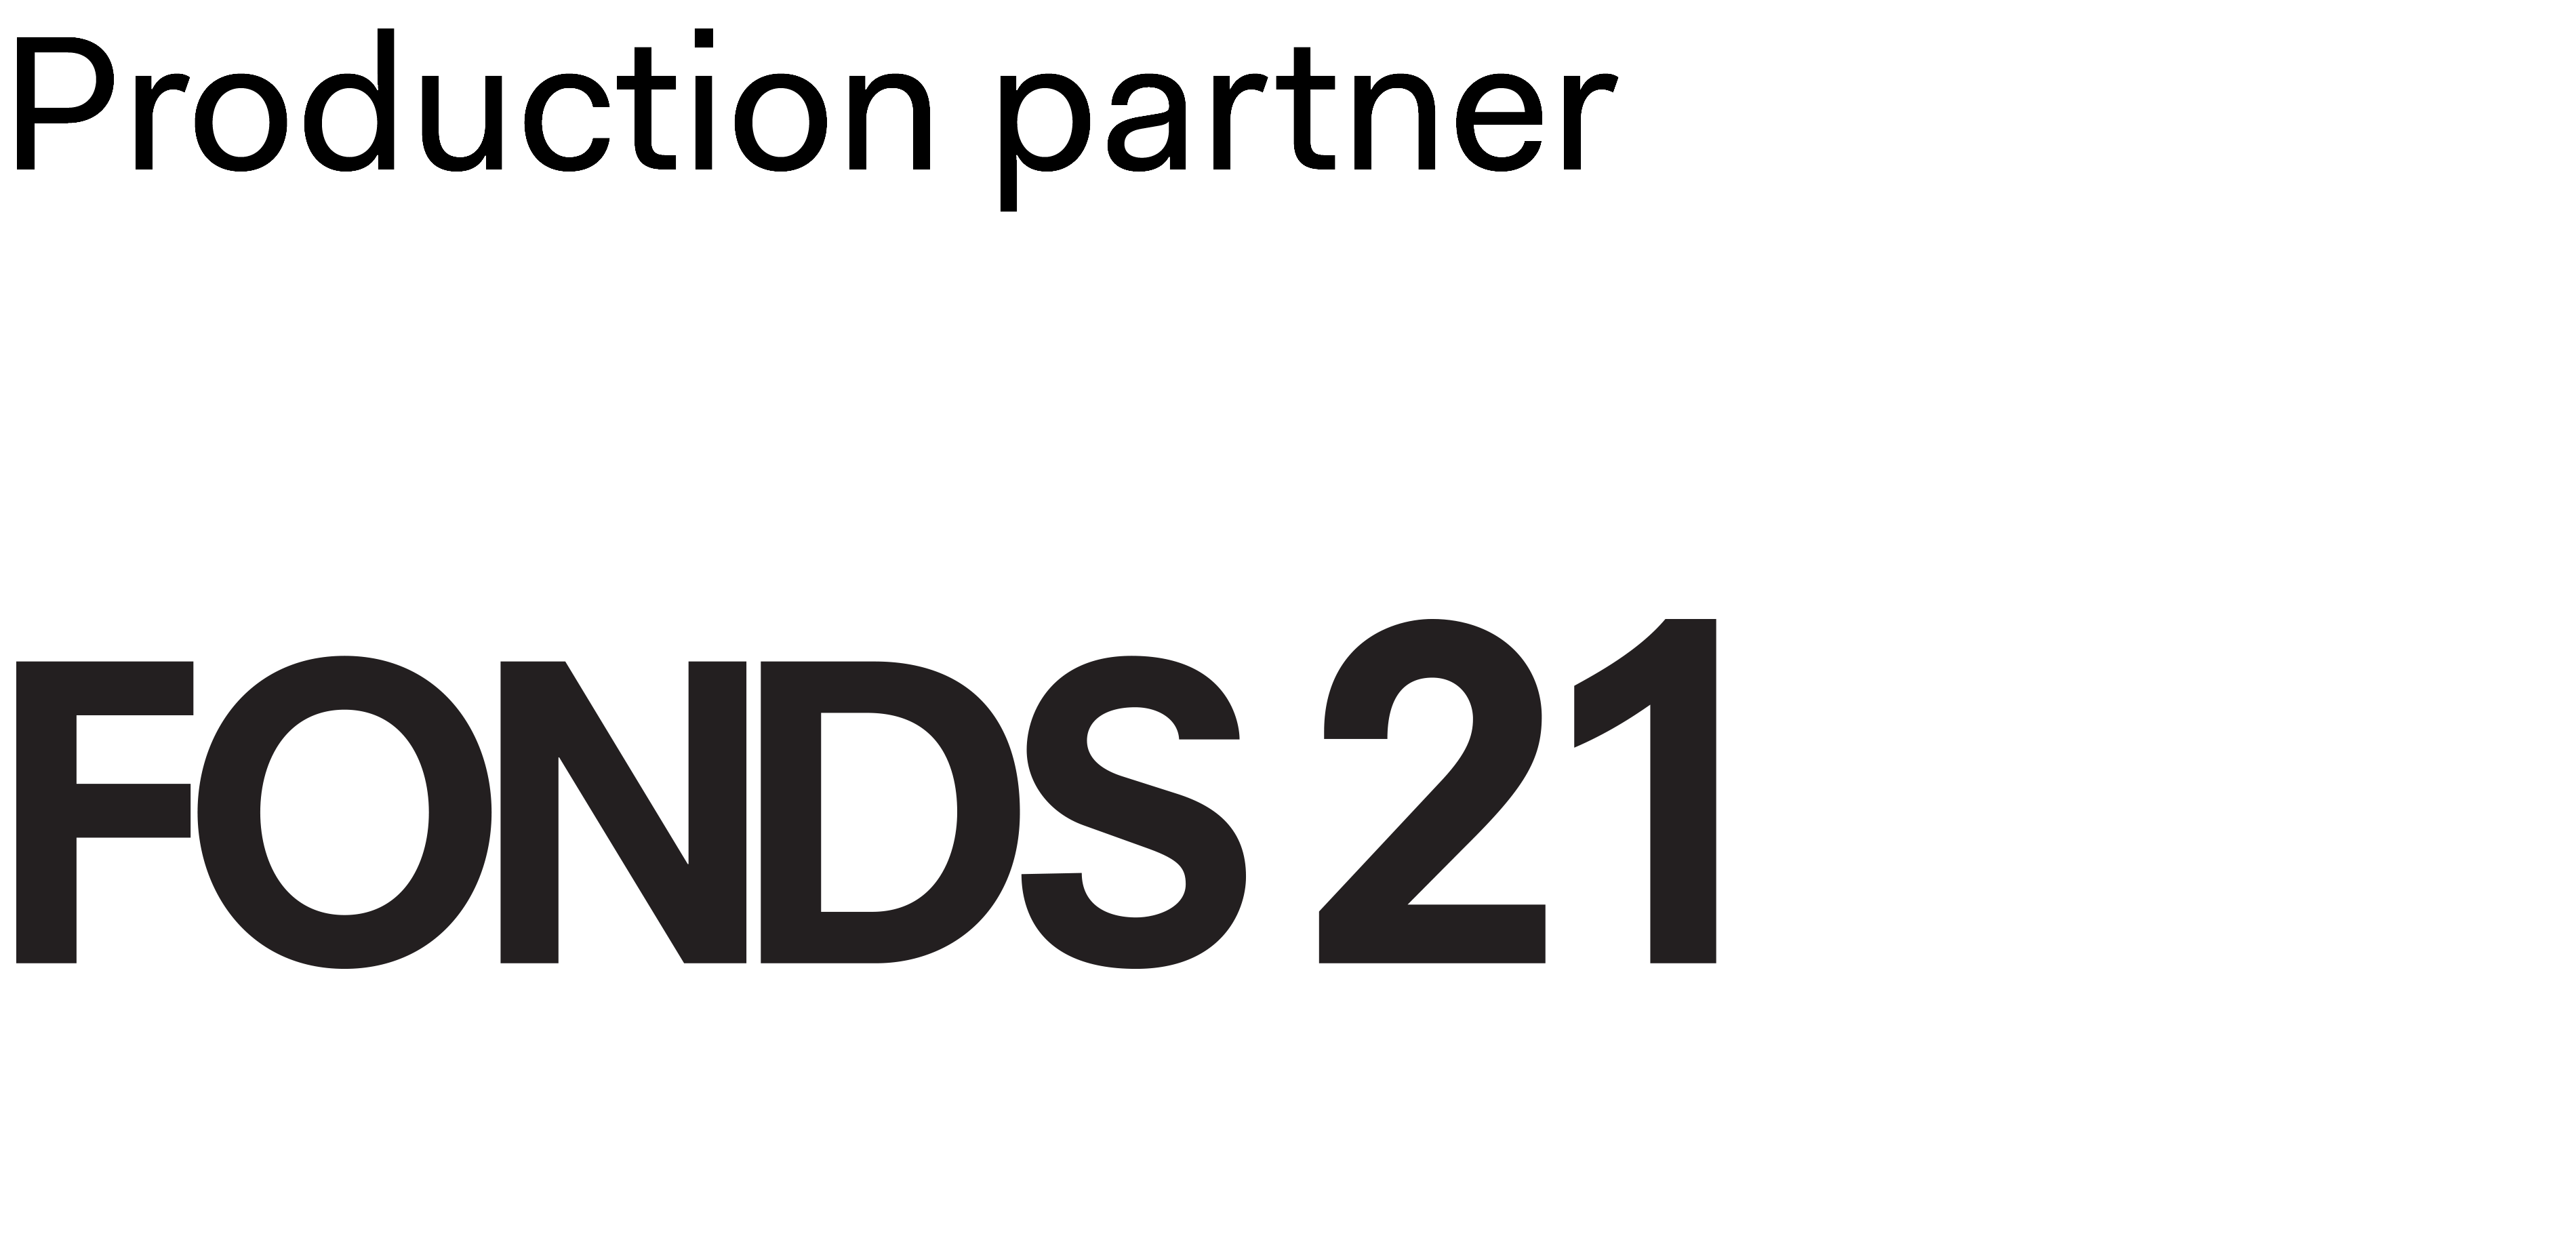 Fonds 21 logo with surtitle 'production partner'